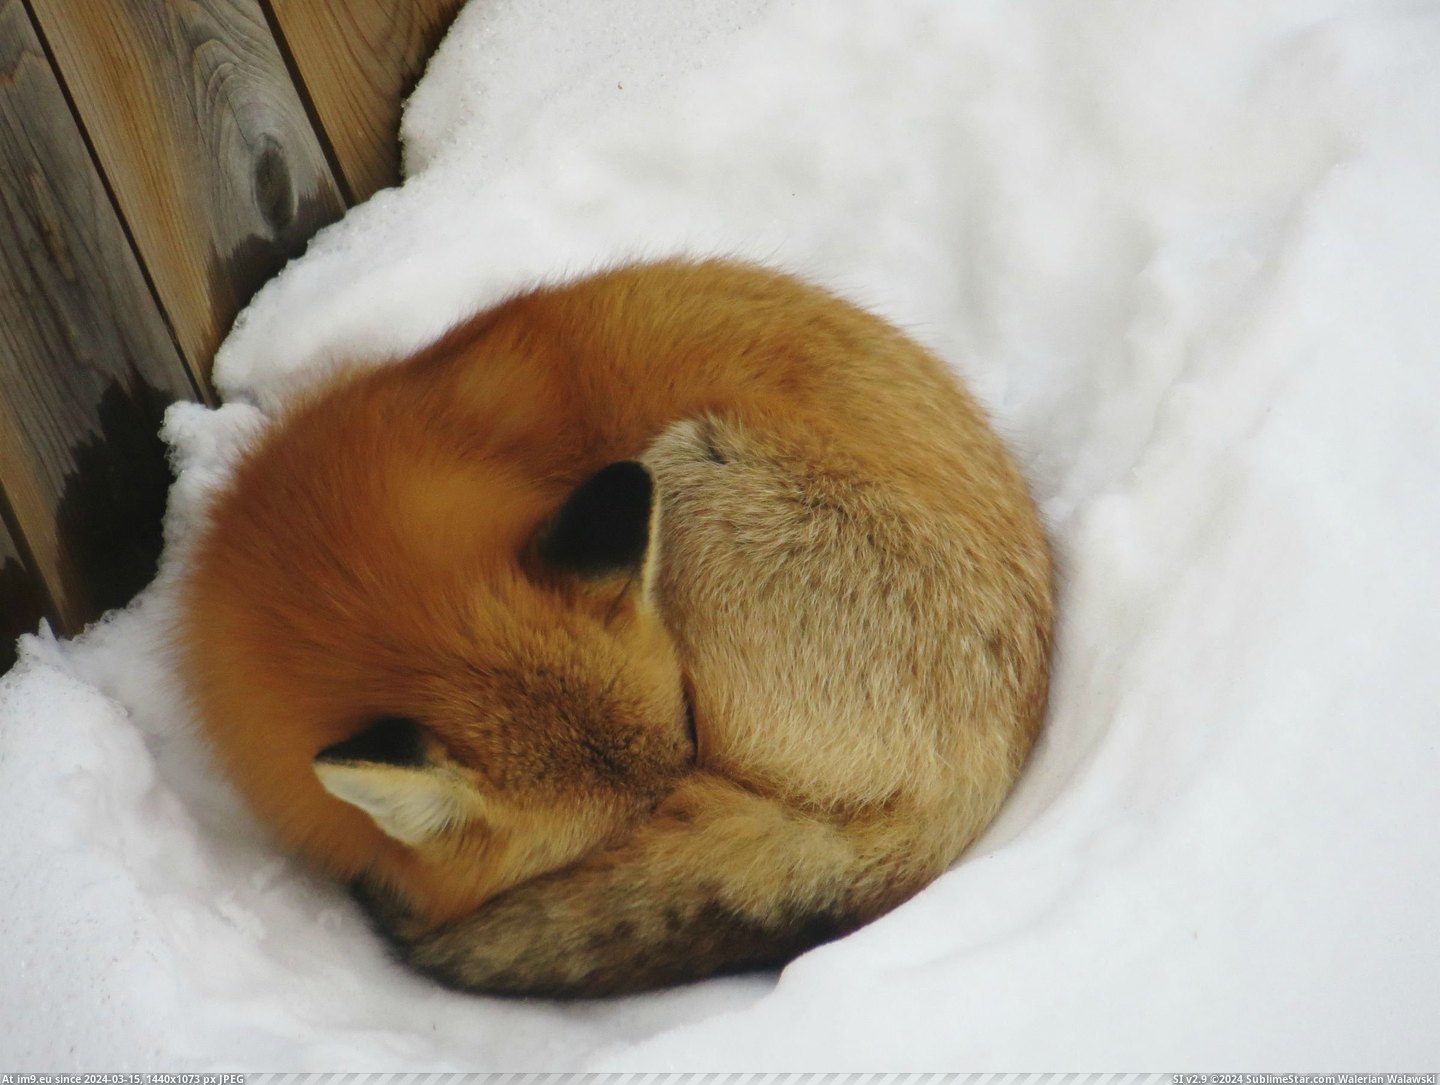 #Red #Canada #Alberta #Backyard #Fox #Sleeping [Pics] Red fox sleeping in my backyard! Alberta, Canada. 2 Pic. (Изображение из альбом My r/PICS favs))